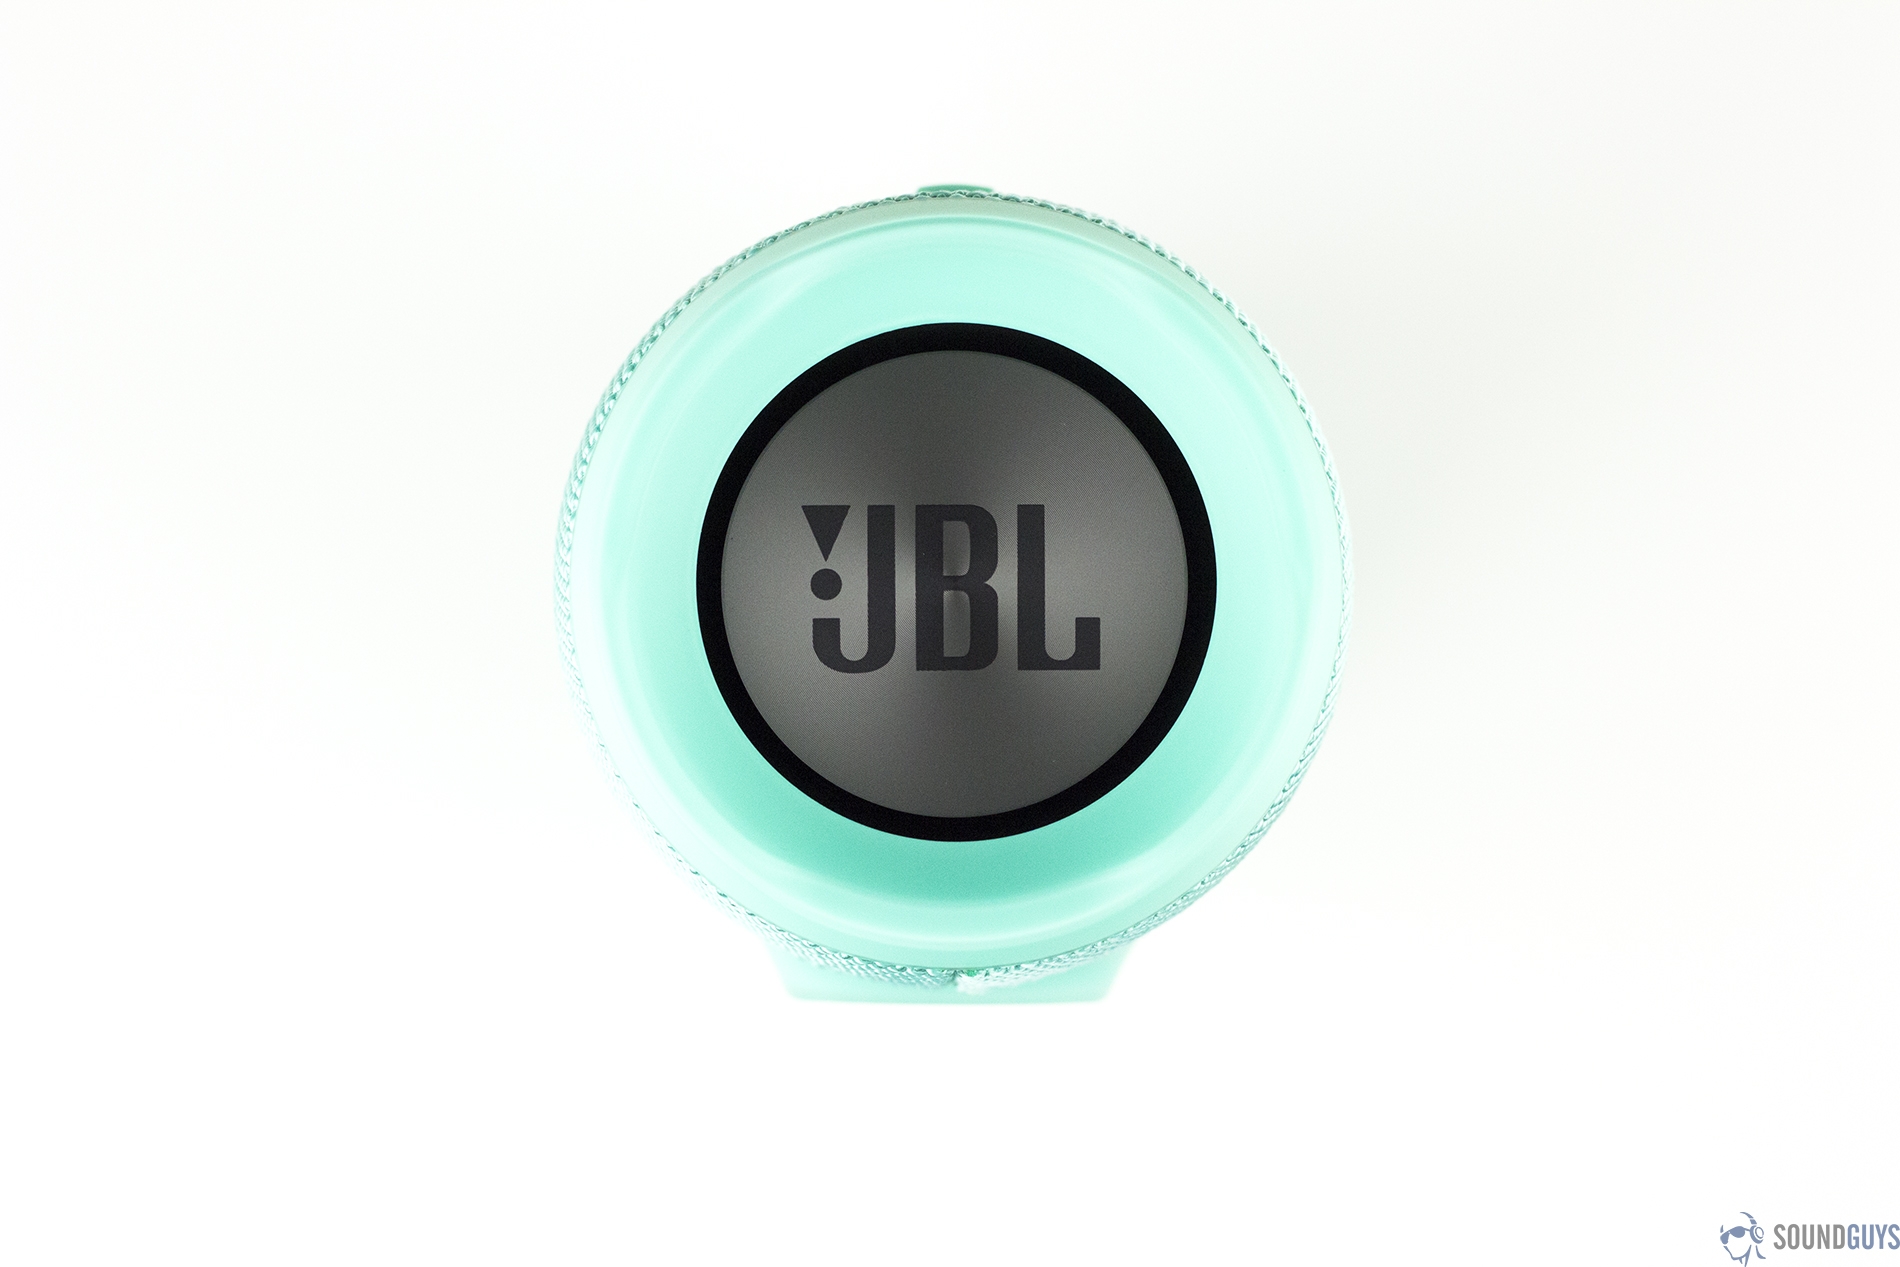 201 Jbl Logo Stock Photos - Free & Royalty-Free Stock Photos from Dreamstime